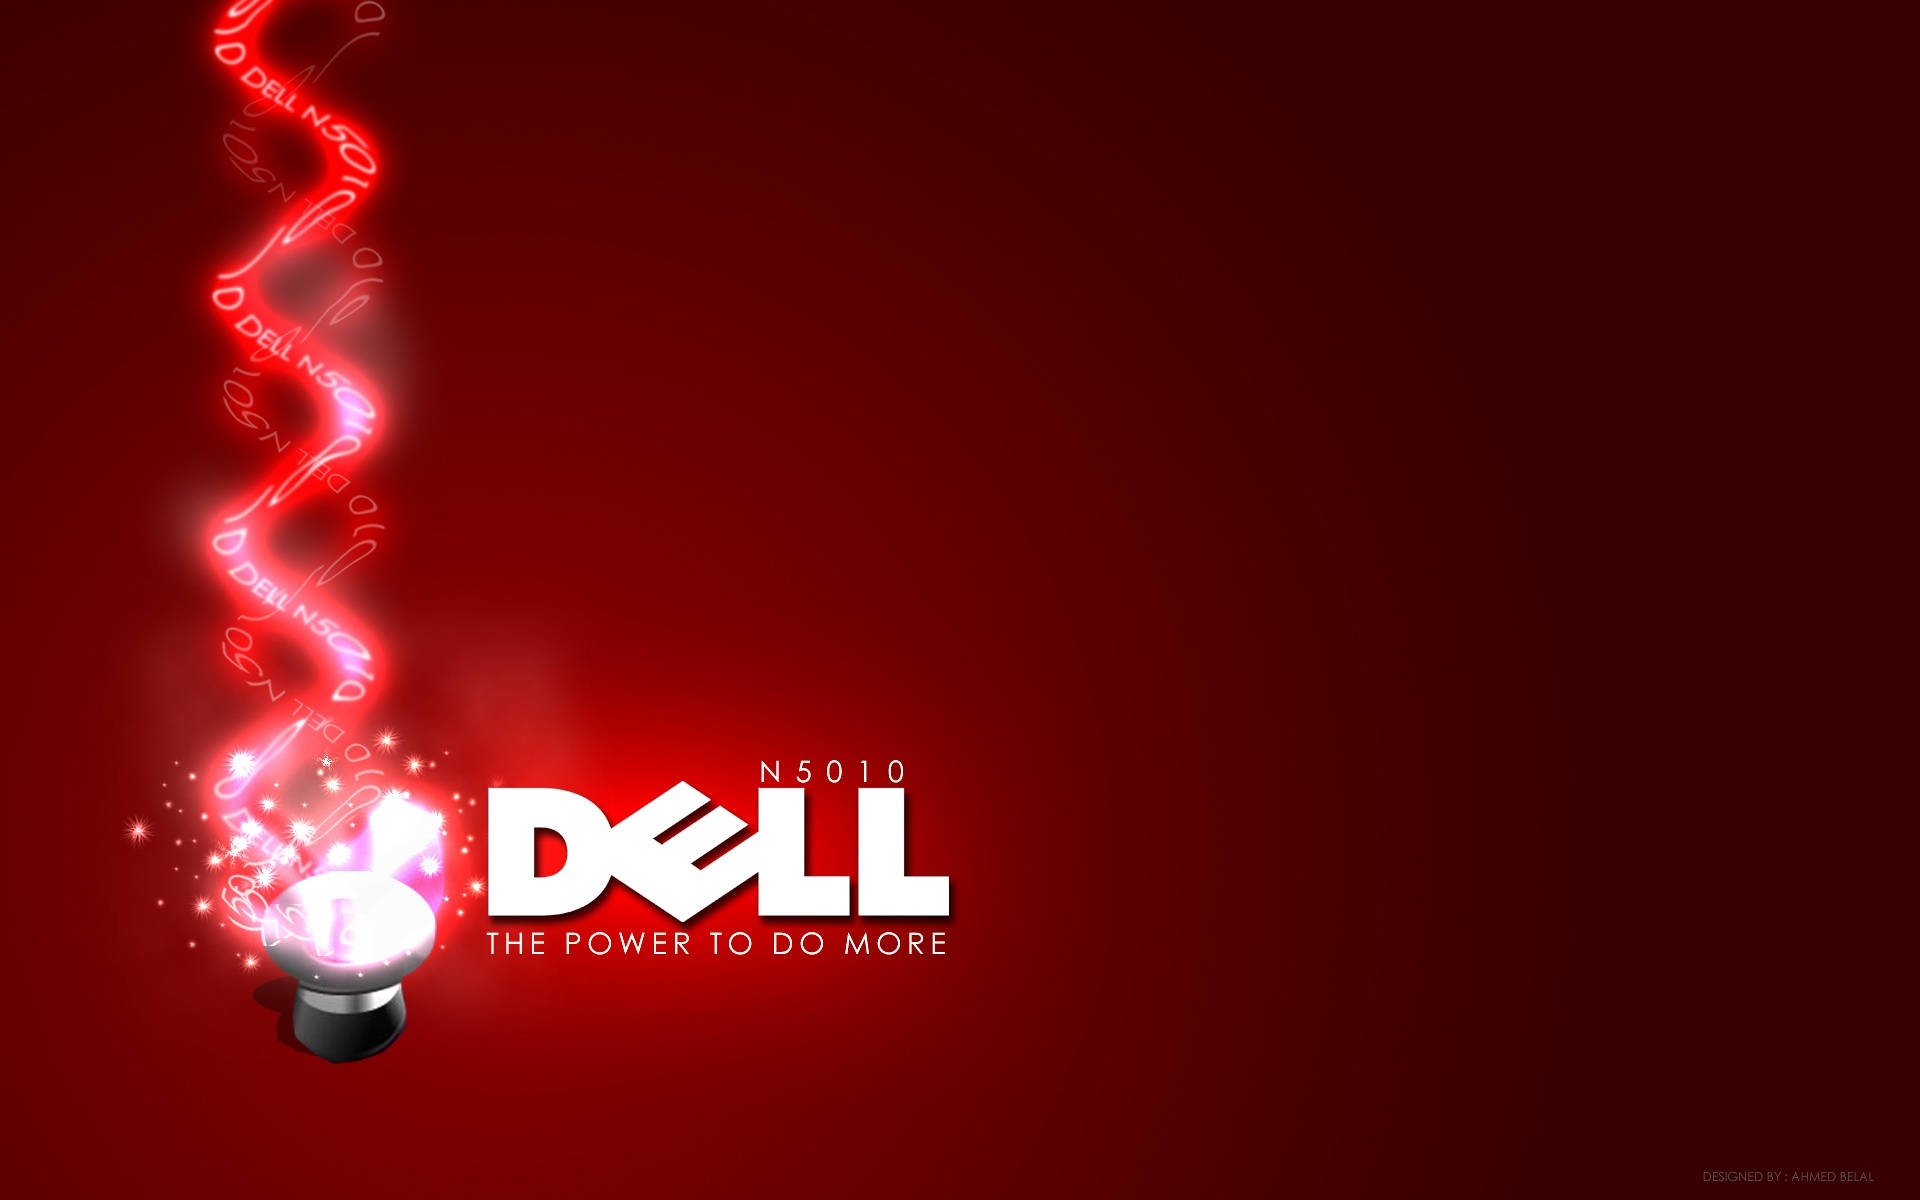 N5010 Dell Hd Logo Wallpaper